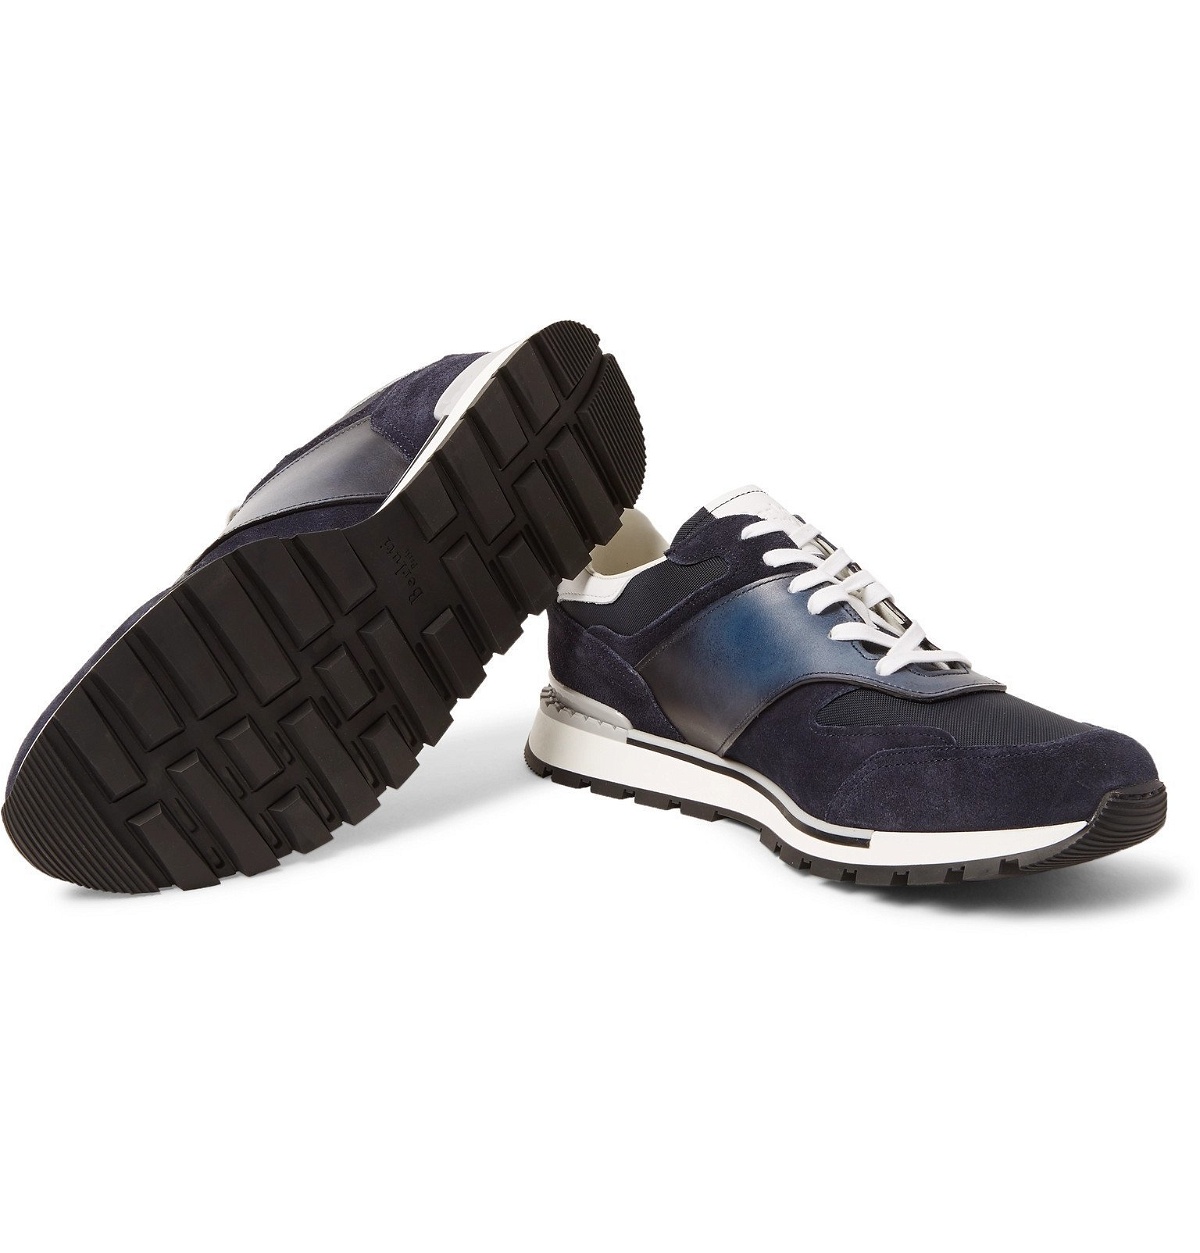 Berluti - Run Track Torino Leather, Suede and Nylon Sneakers